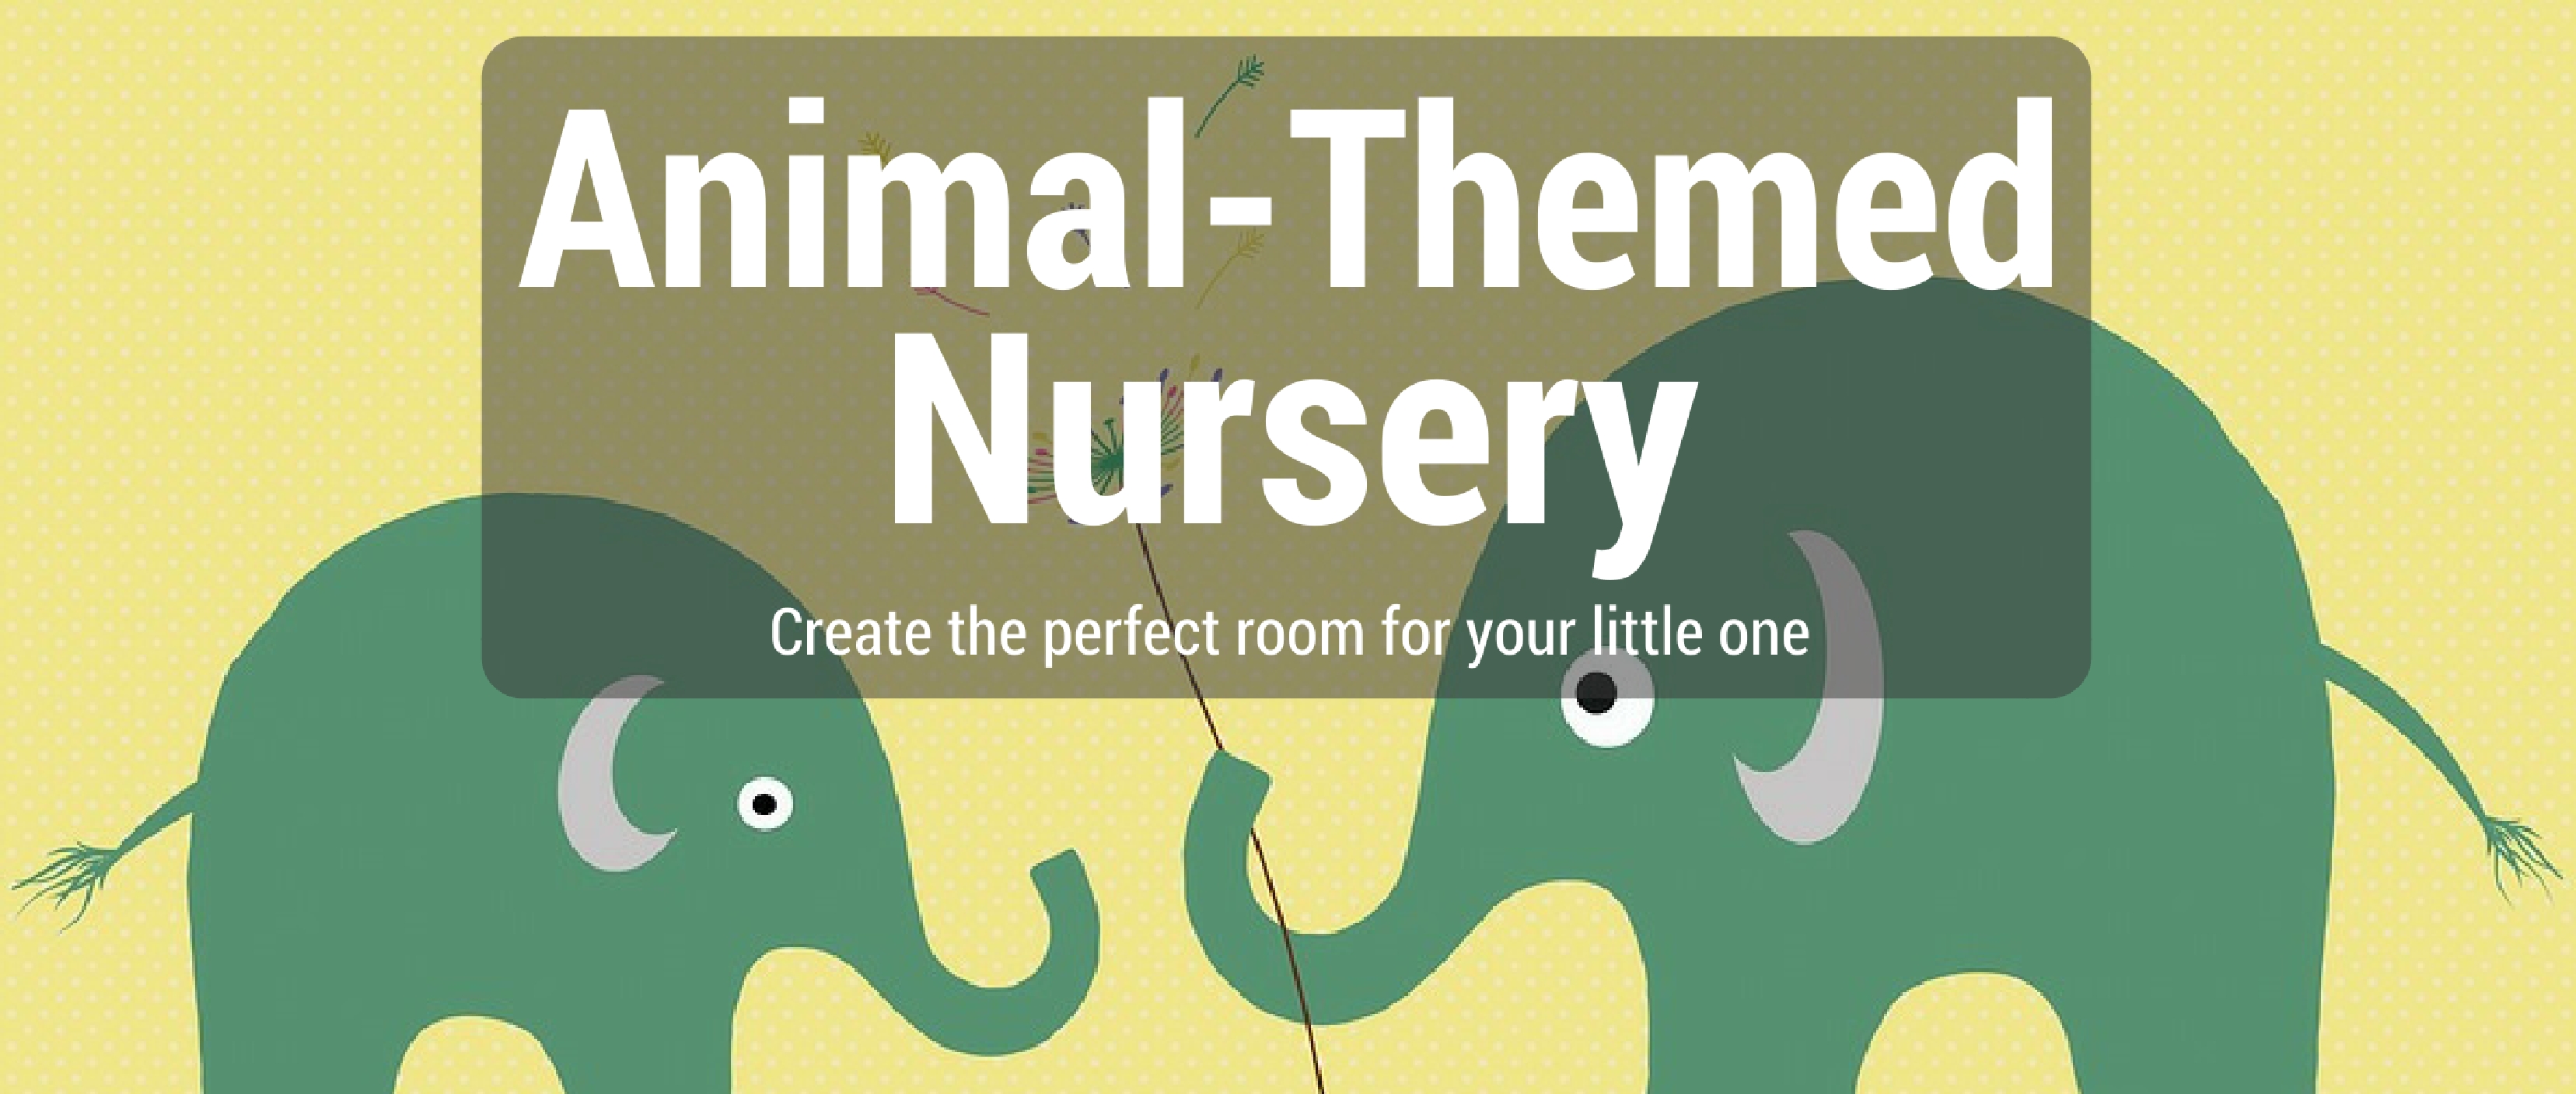 Decorating an Animal-Themed Nursery